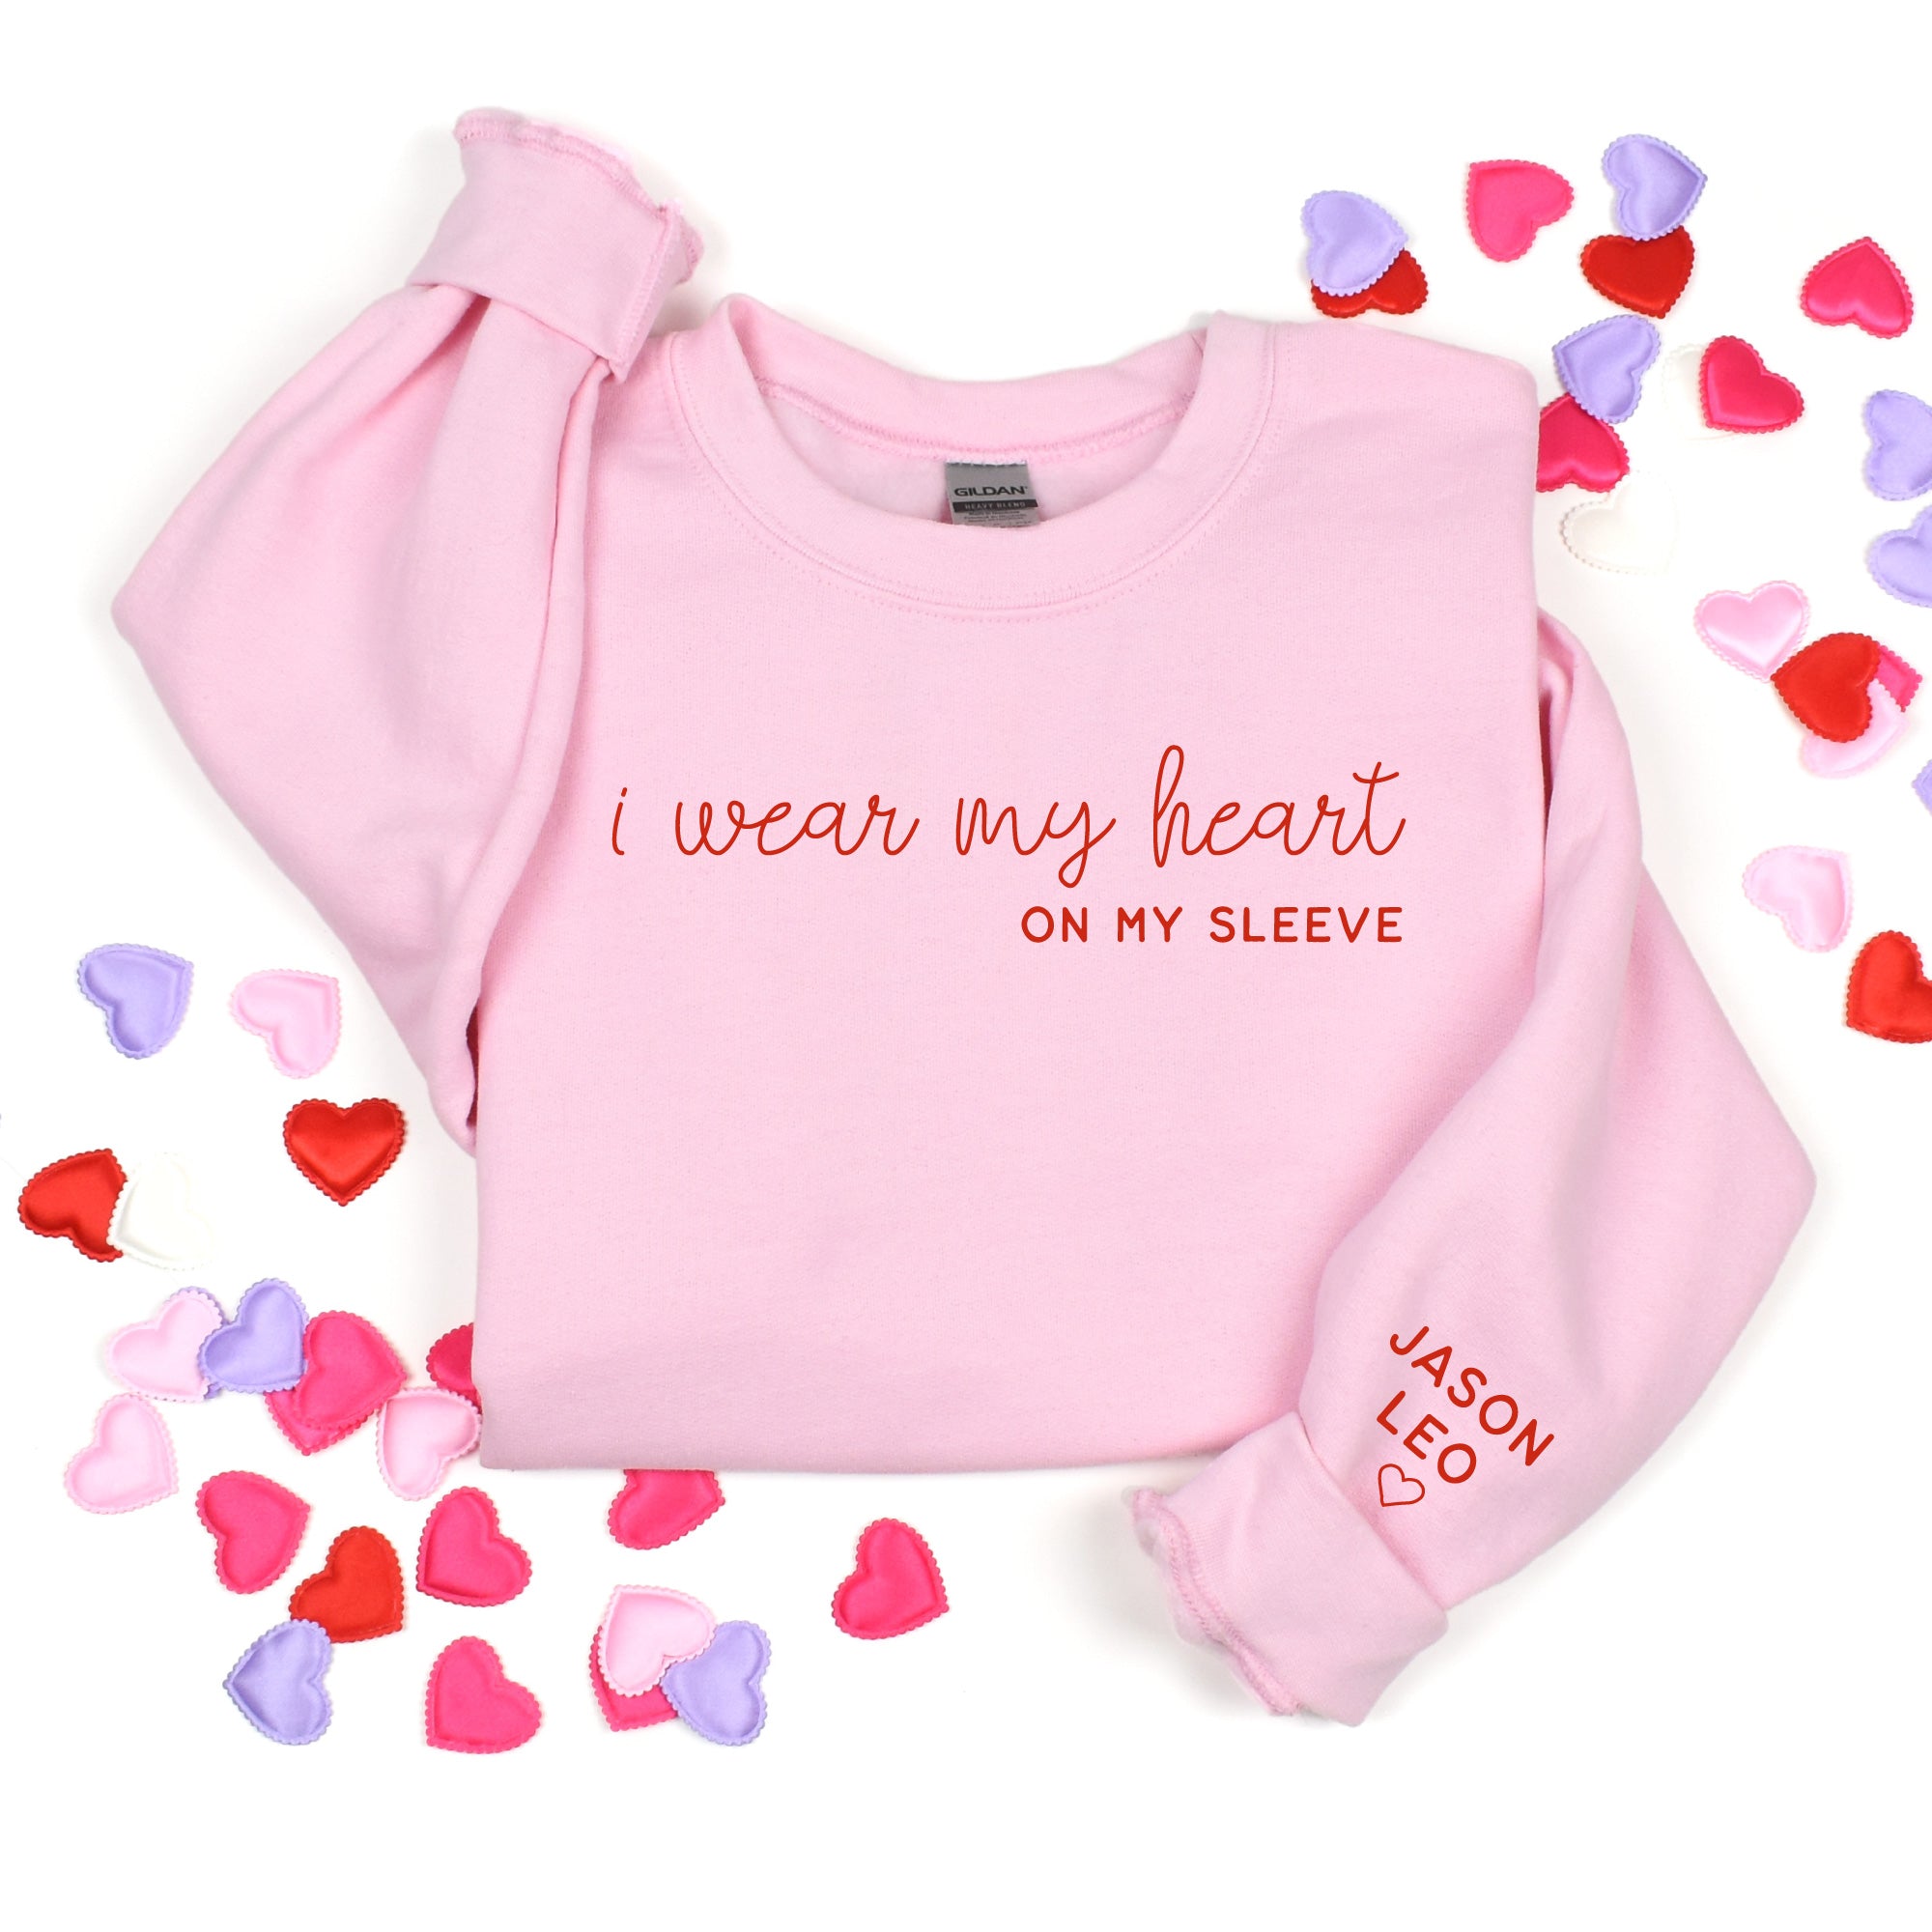 Cuddle Sleep Dream Heart on My Sleeve | Pink Sweatshirt